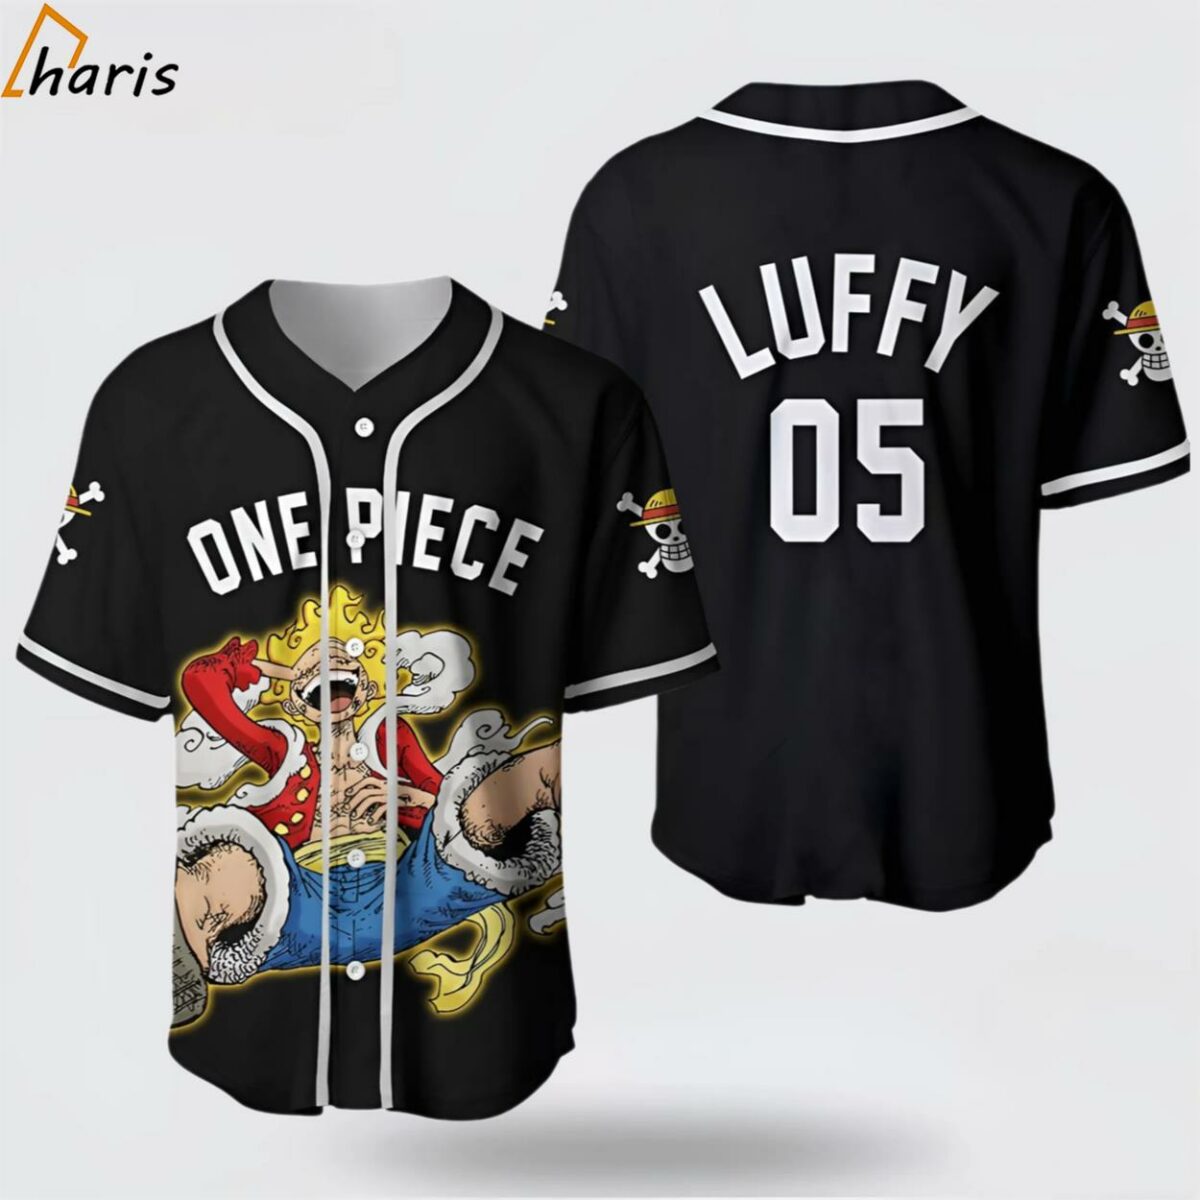 Luffy Gear 5 Baseball Jersey One Piece Anime Sport Style 1 jersey